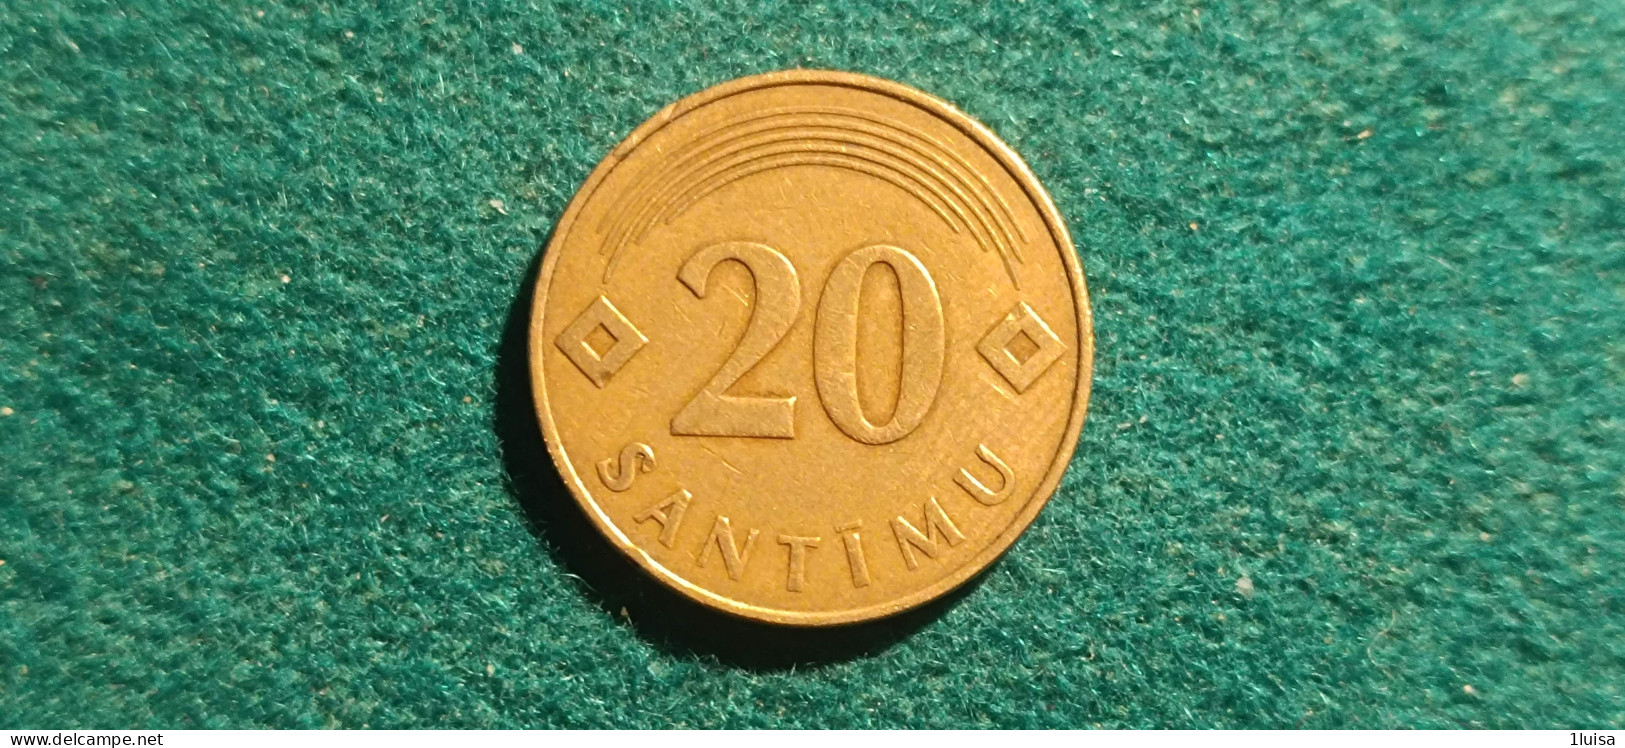 LITUANIA 20 SANTIMU 1992 - Lituania